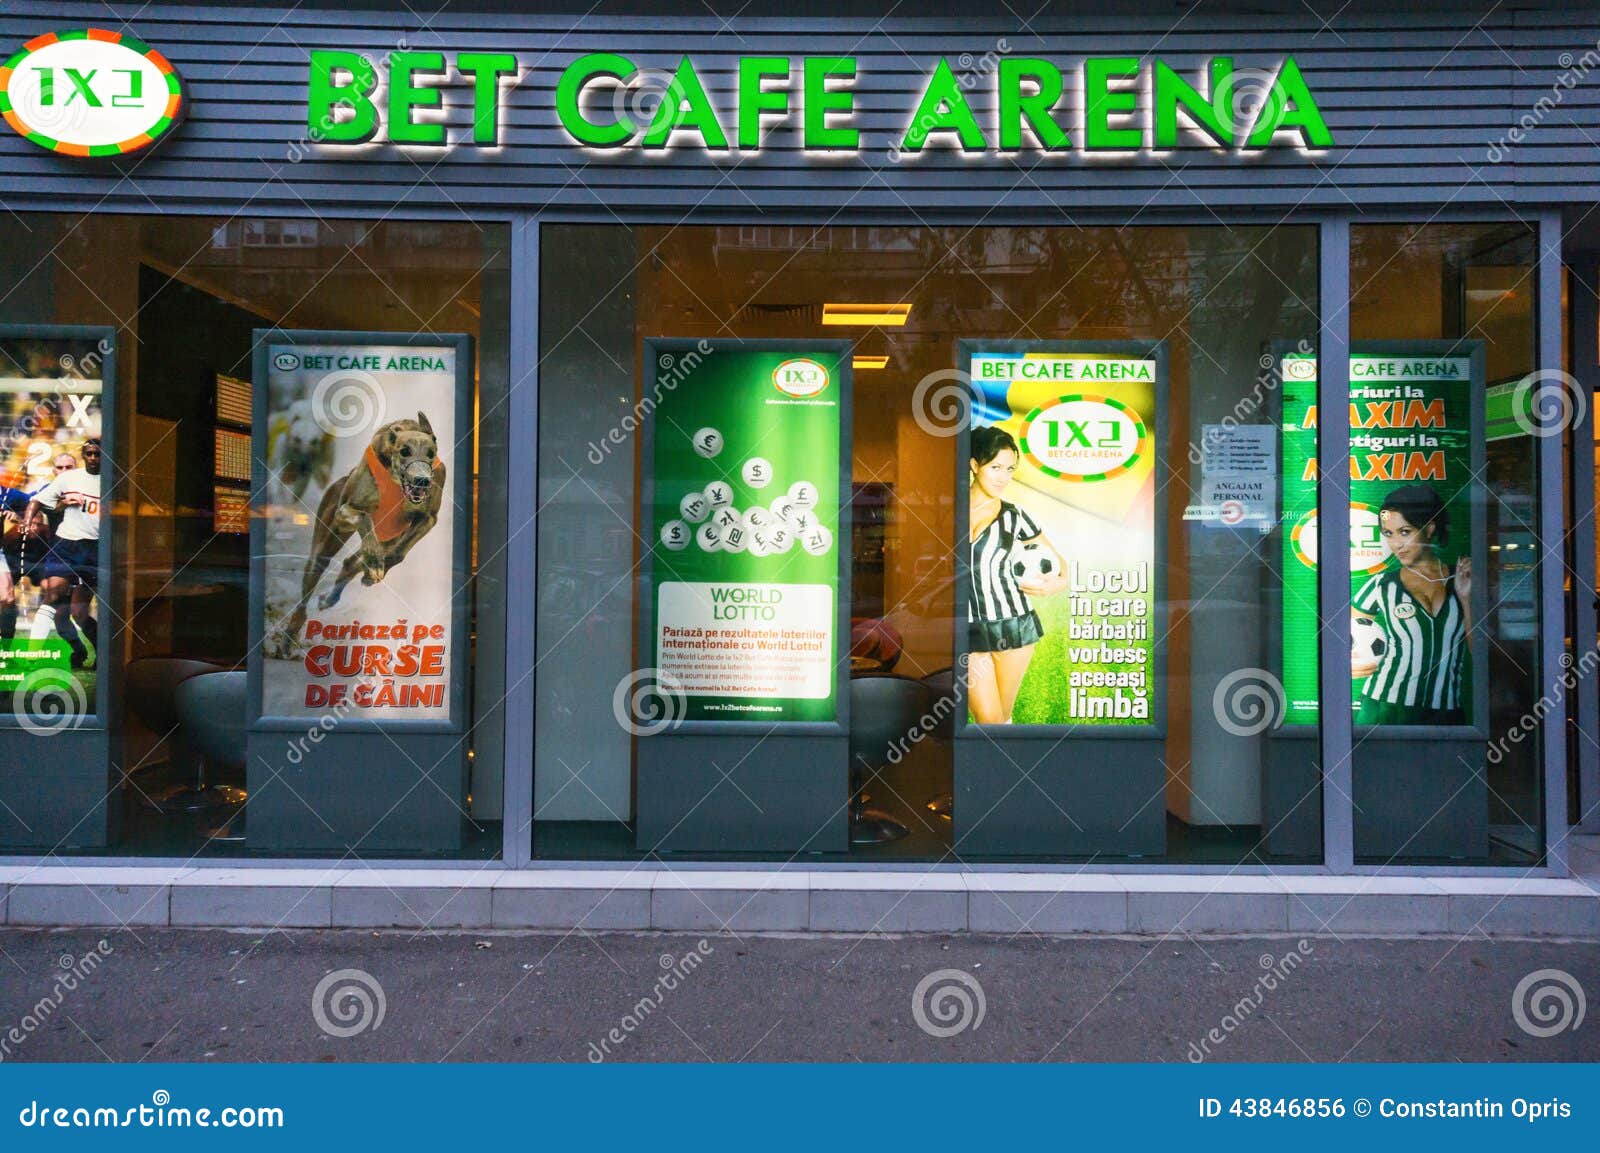 Bet Cafe Arena